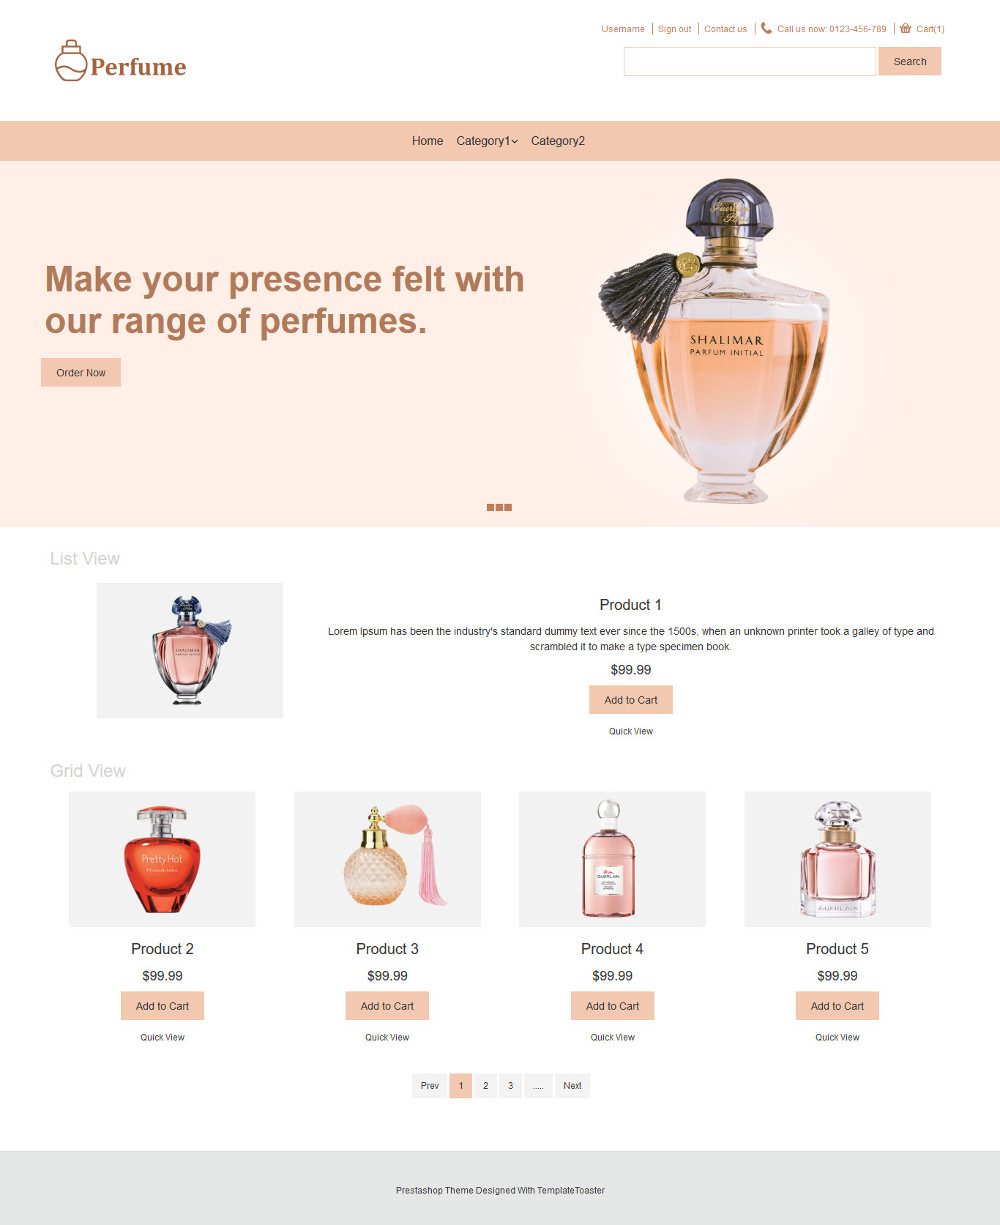 Perfume Online Store OpenCart Theme